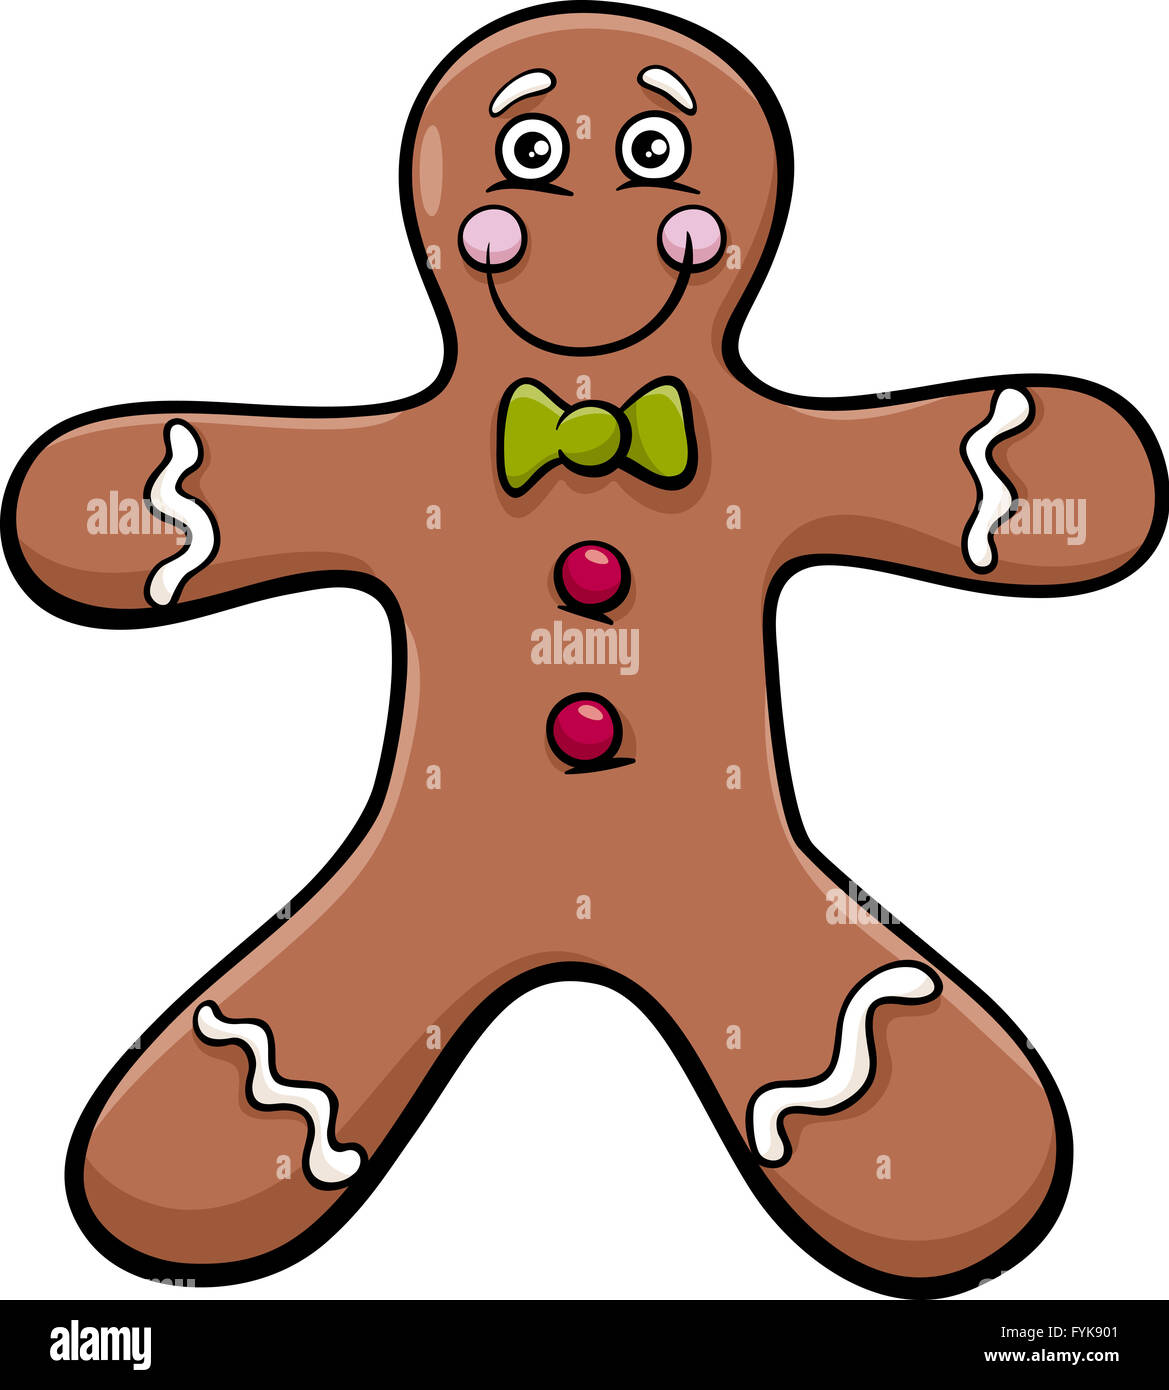 gingerbread man cartoon illustration Stock Photo